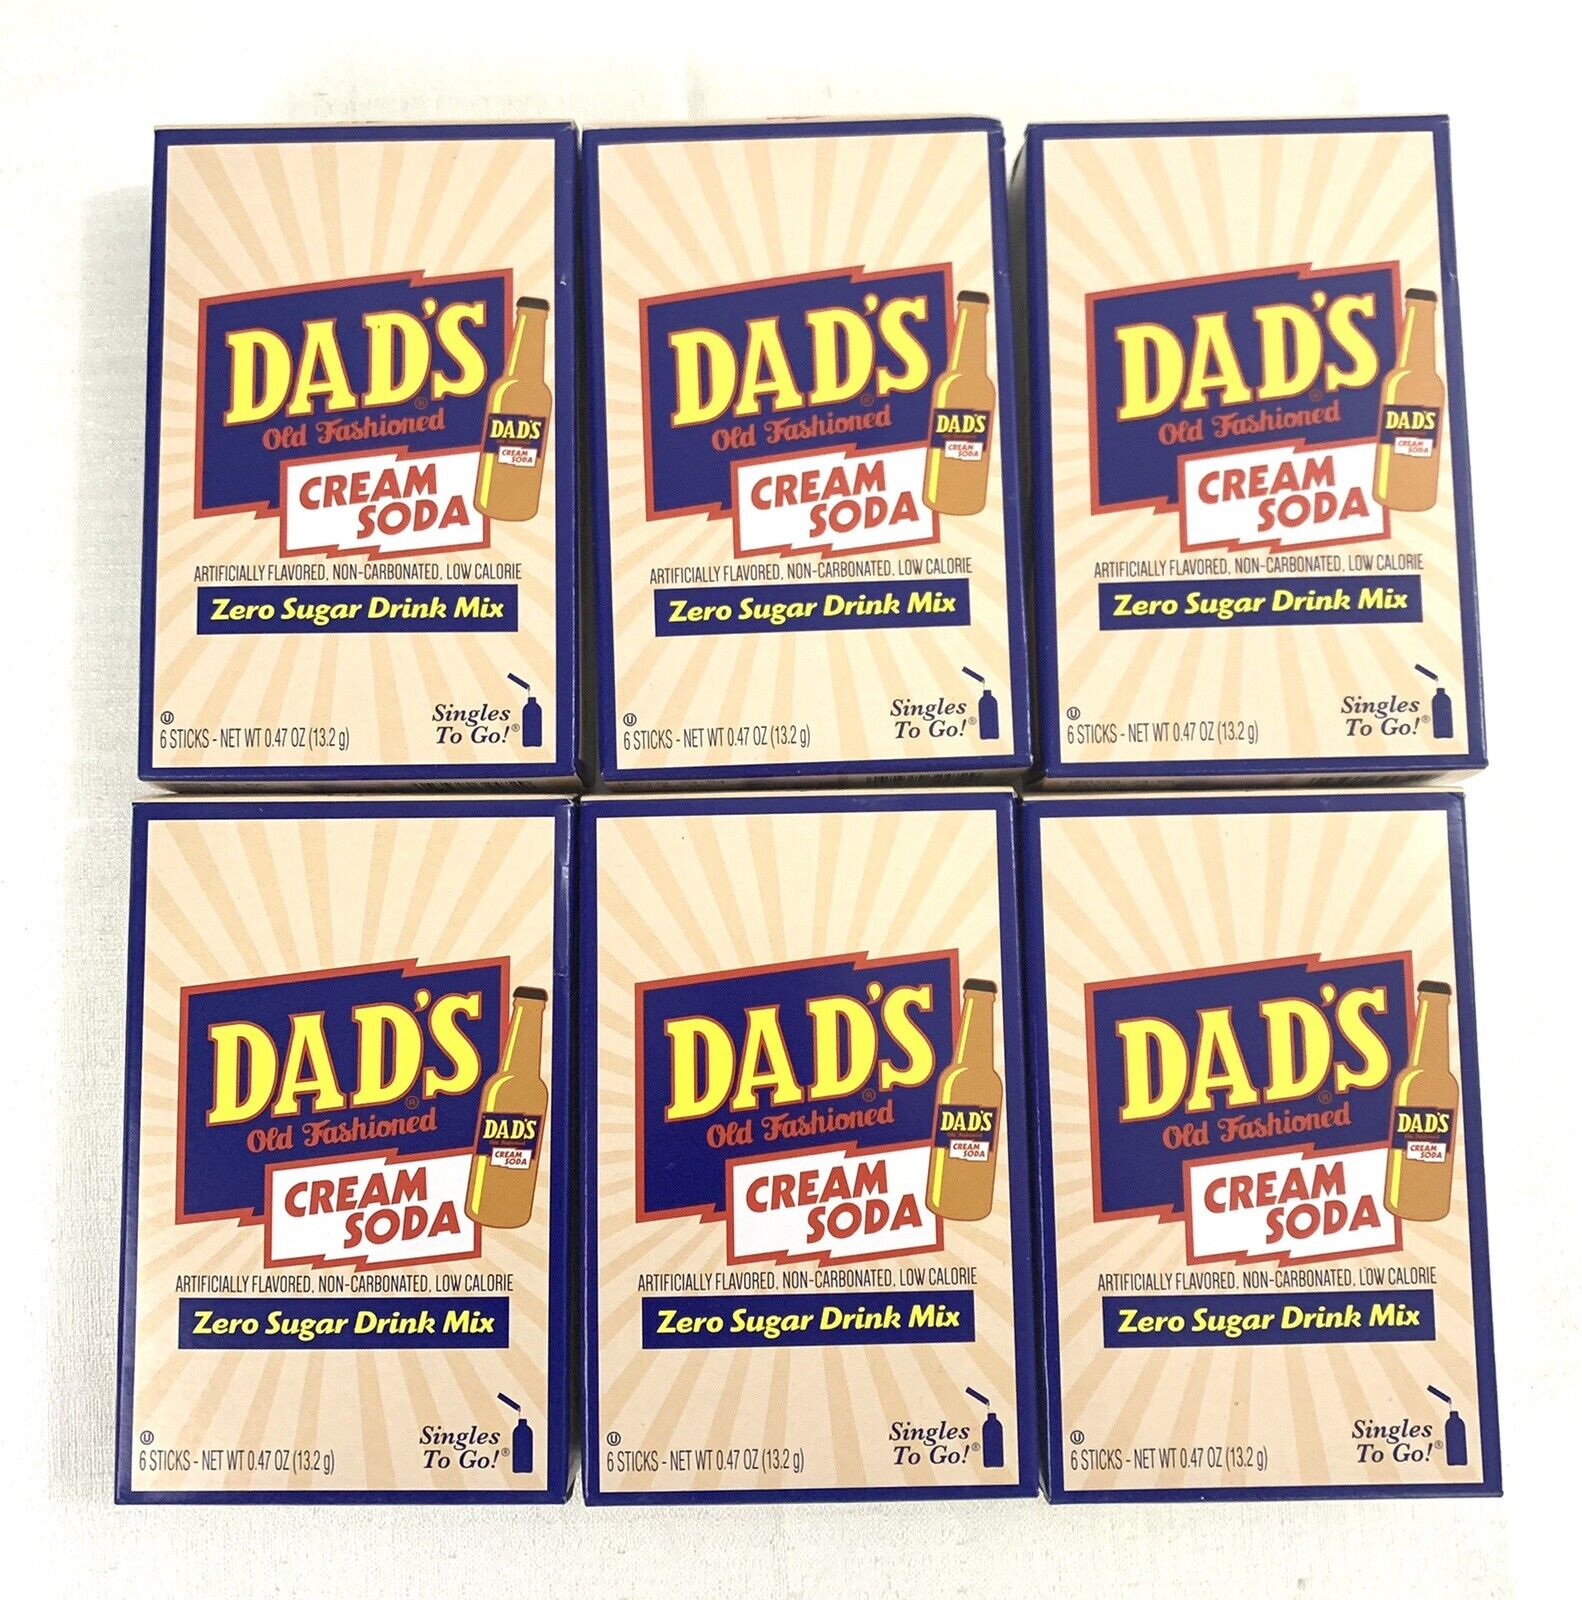 6 Dads Old Fashioned Cream Soda Singles to Go Zero Sugar Drink Mix 36 Sticks New Dad's Old Fashion Cream Soda N/A, Does Not Apply